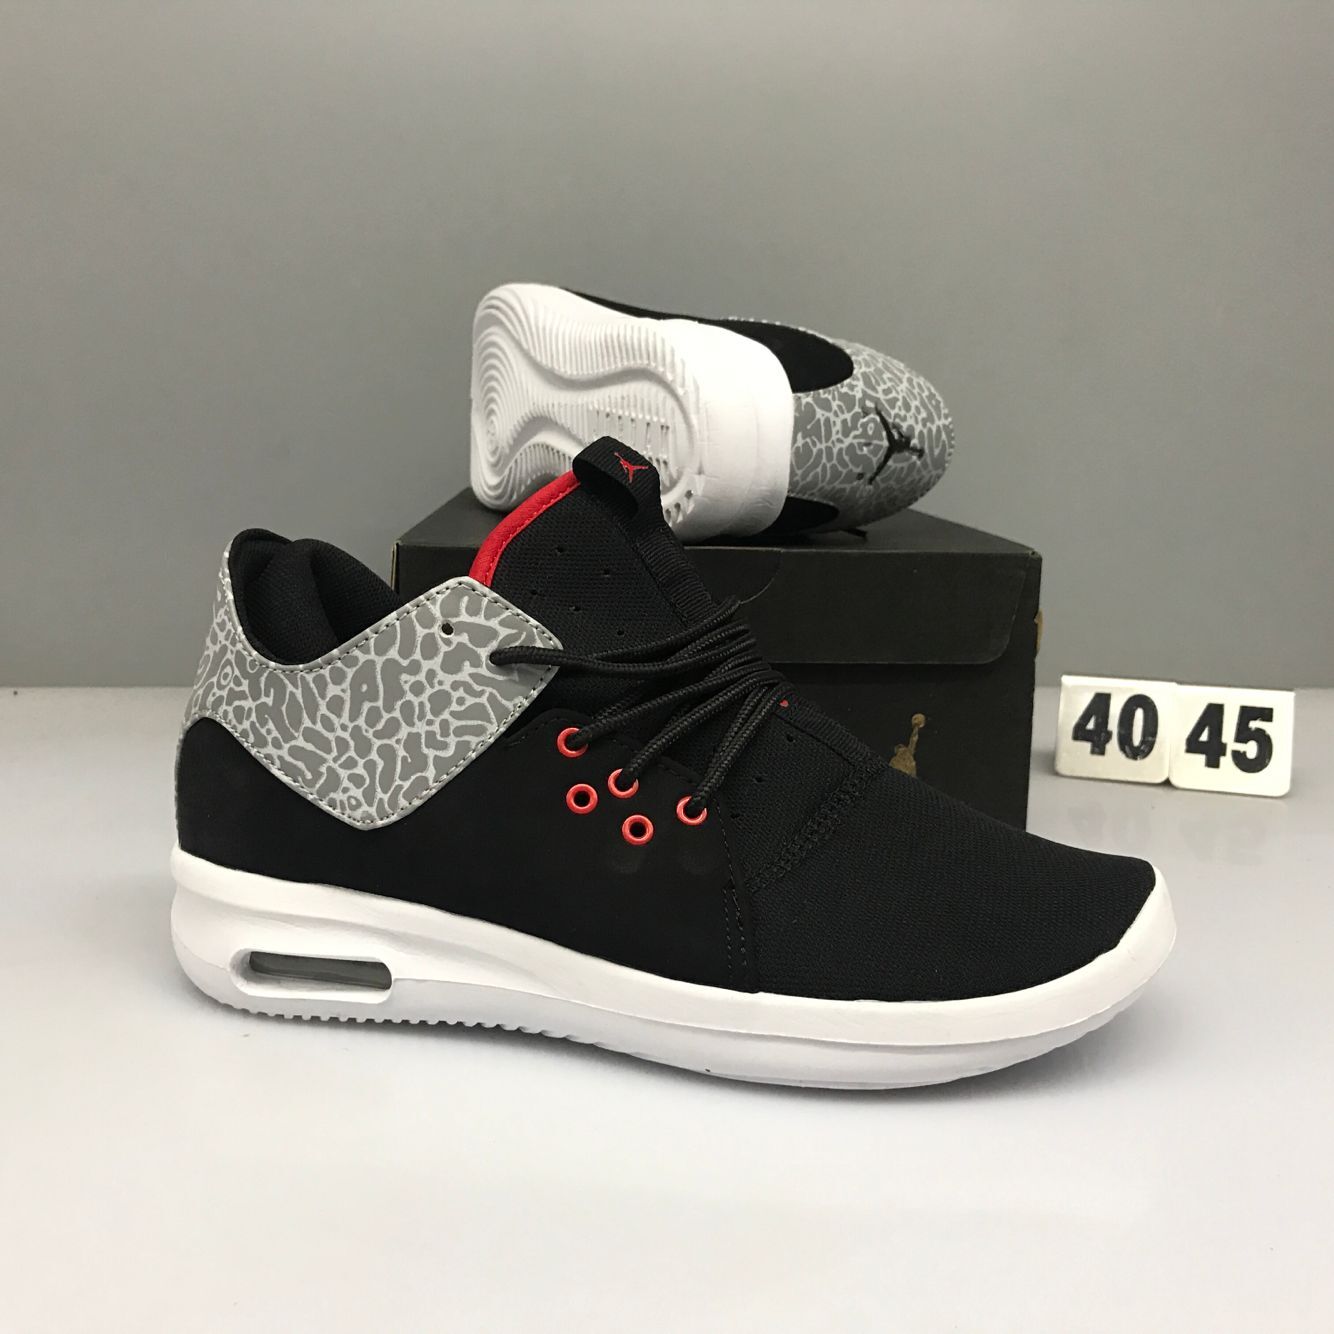 Nike Air Jordan First Classic Black Grey Red Running Shoes